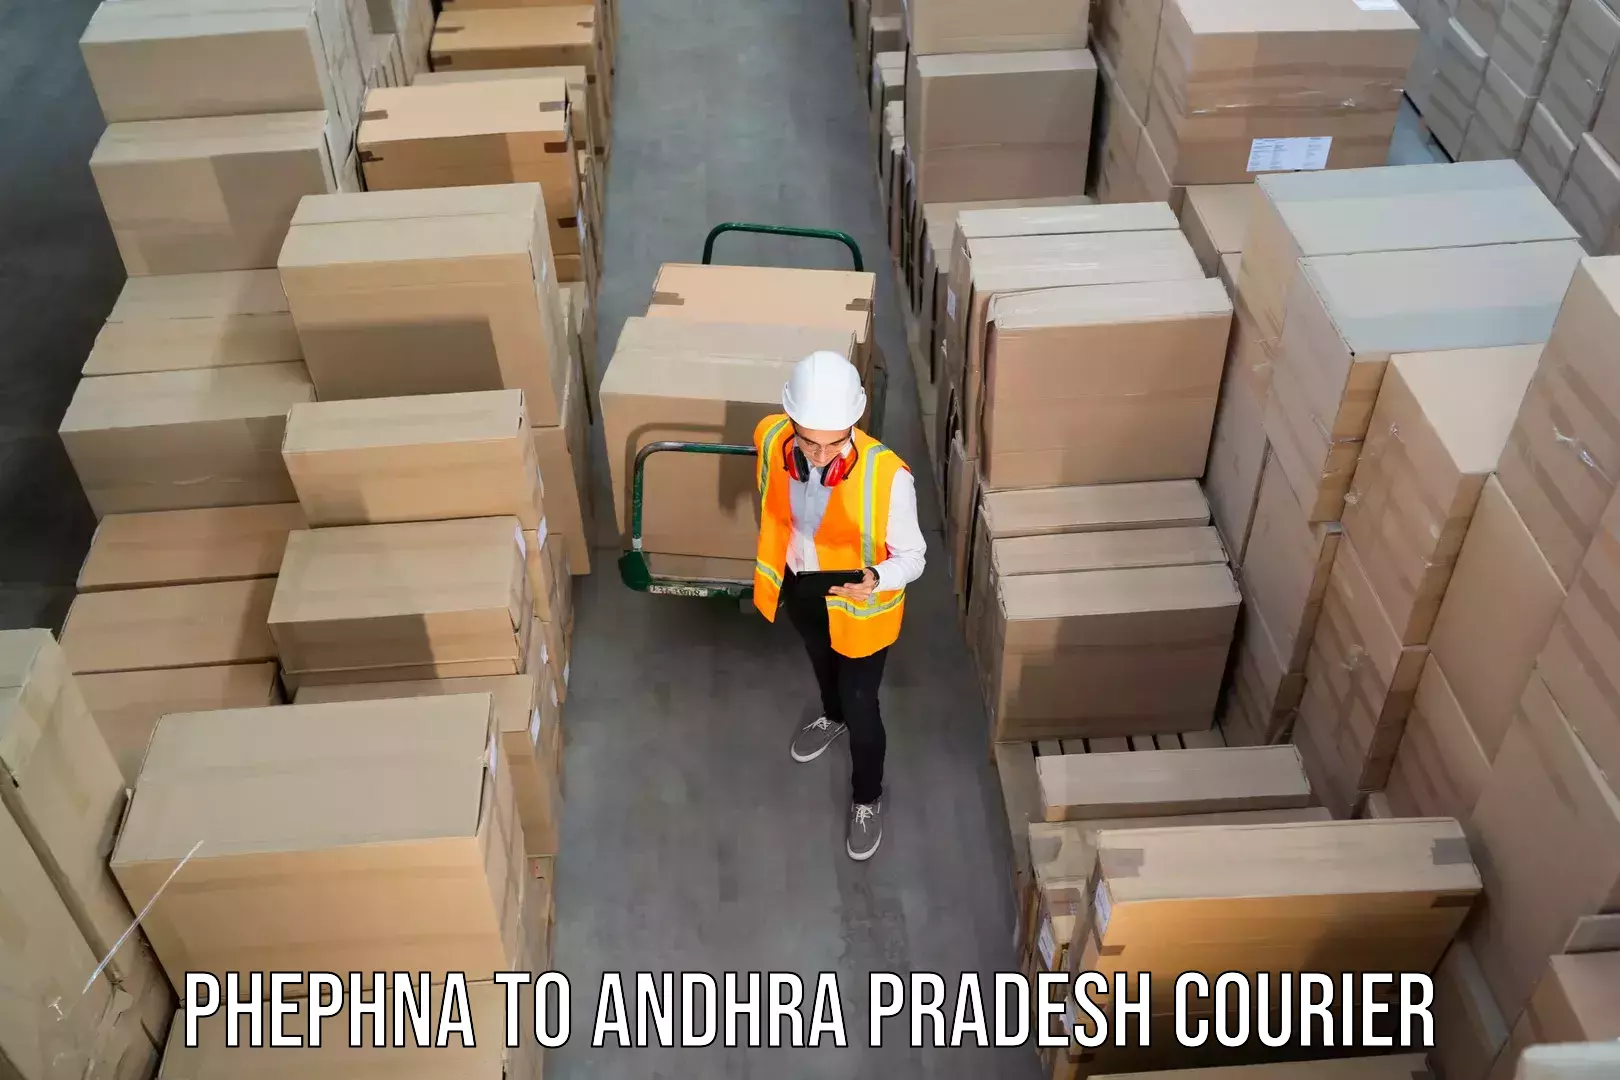 Next day courier Phephna to Andhra Pradesh